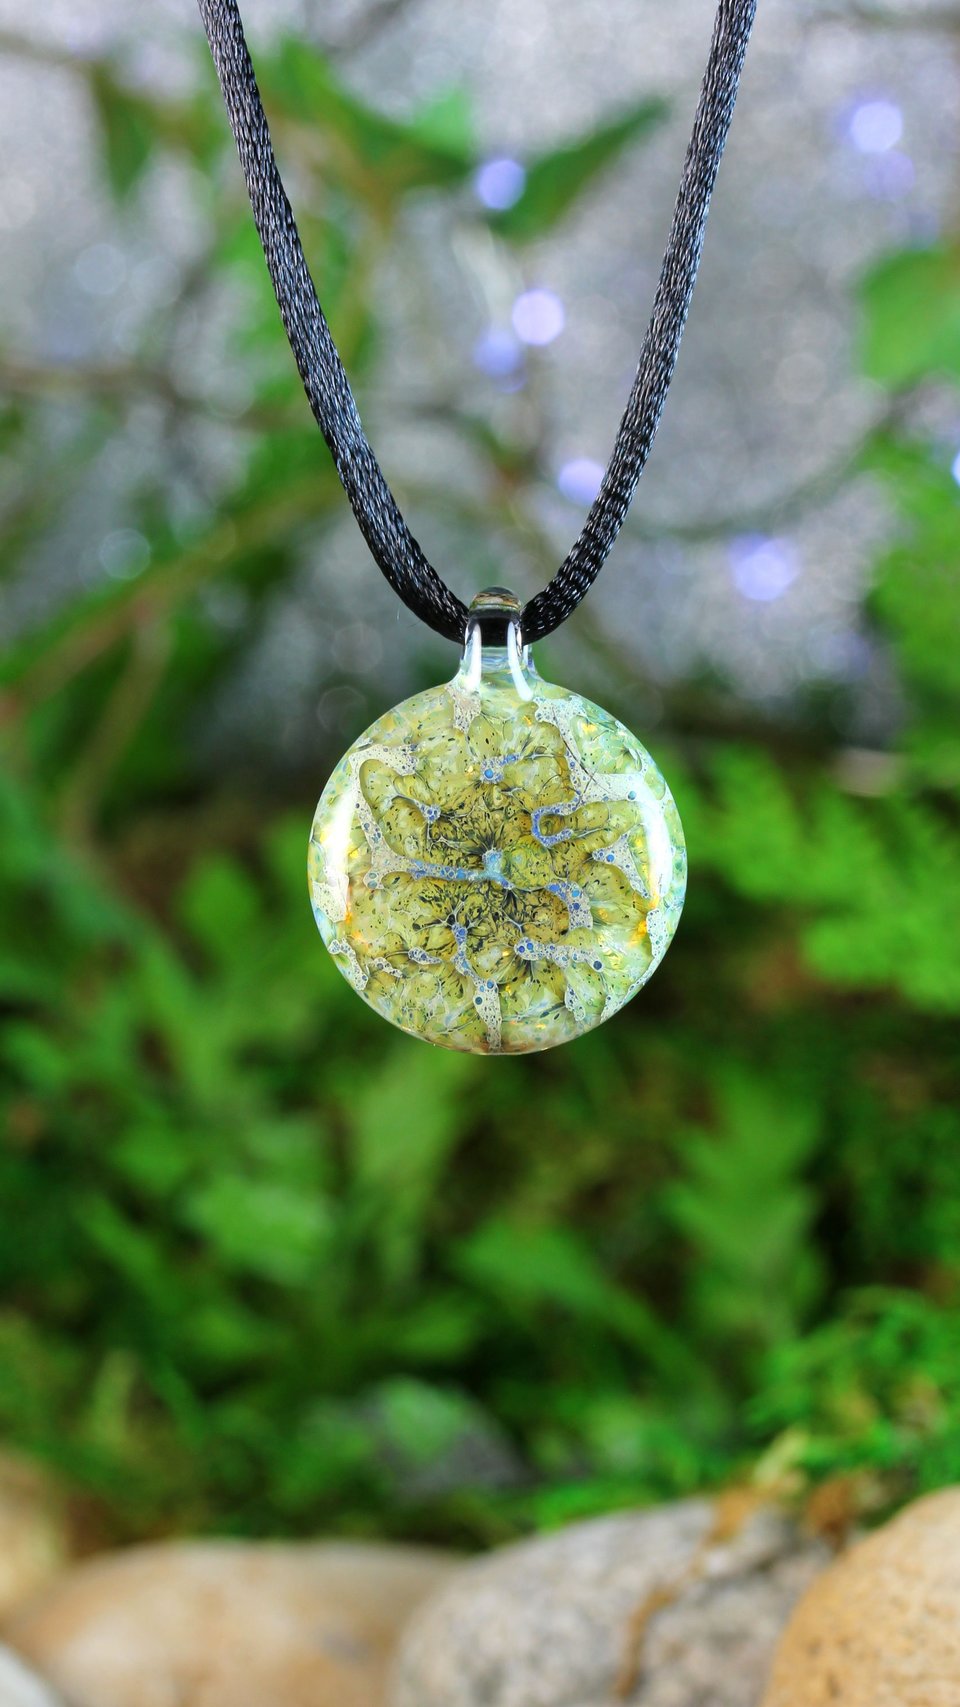 Flower Implosion Lampwork Pendant Necklace // Brosilicate/Boro Glass // Dark Blue, Gray, Yellow Speckled Glitter // Z1132